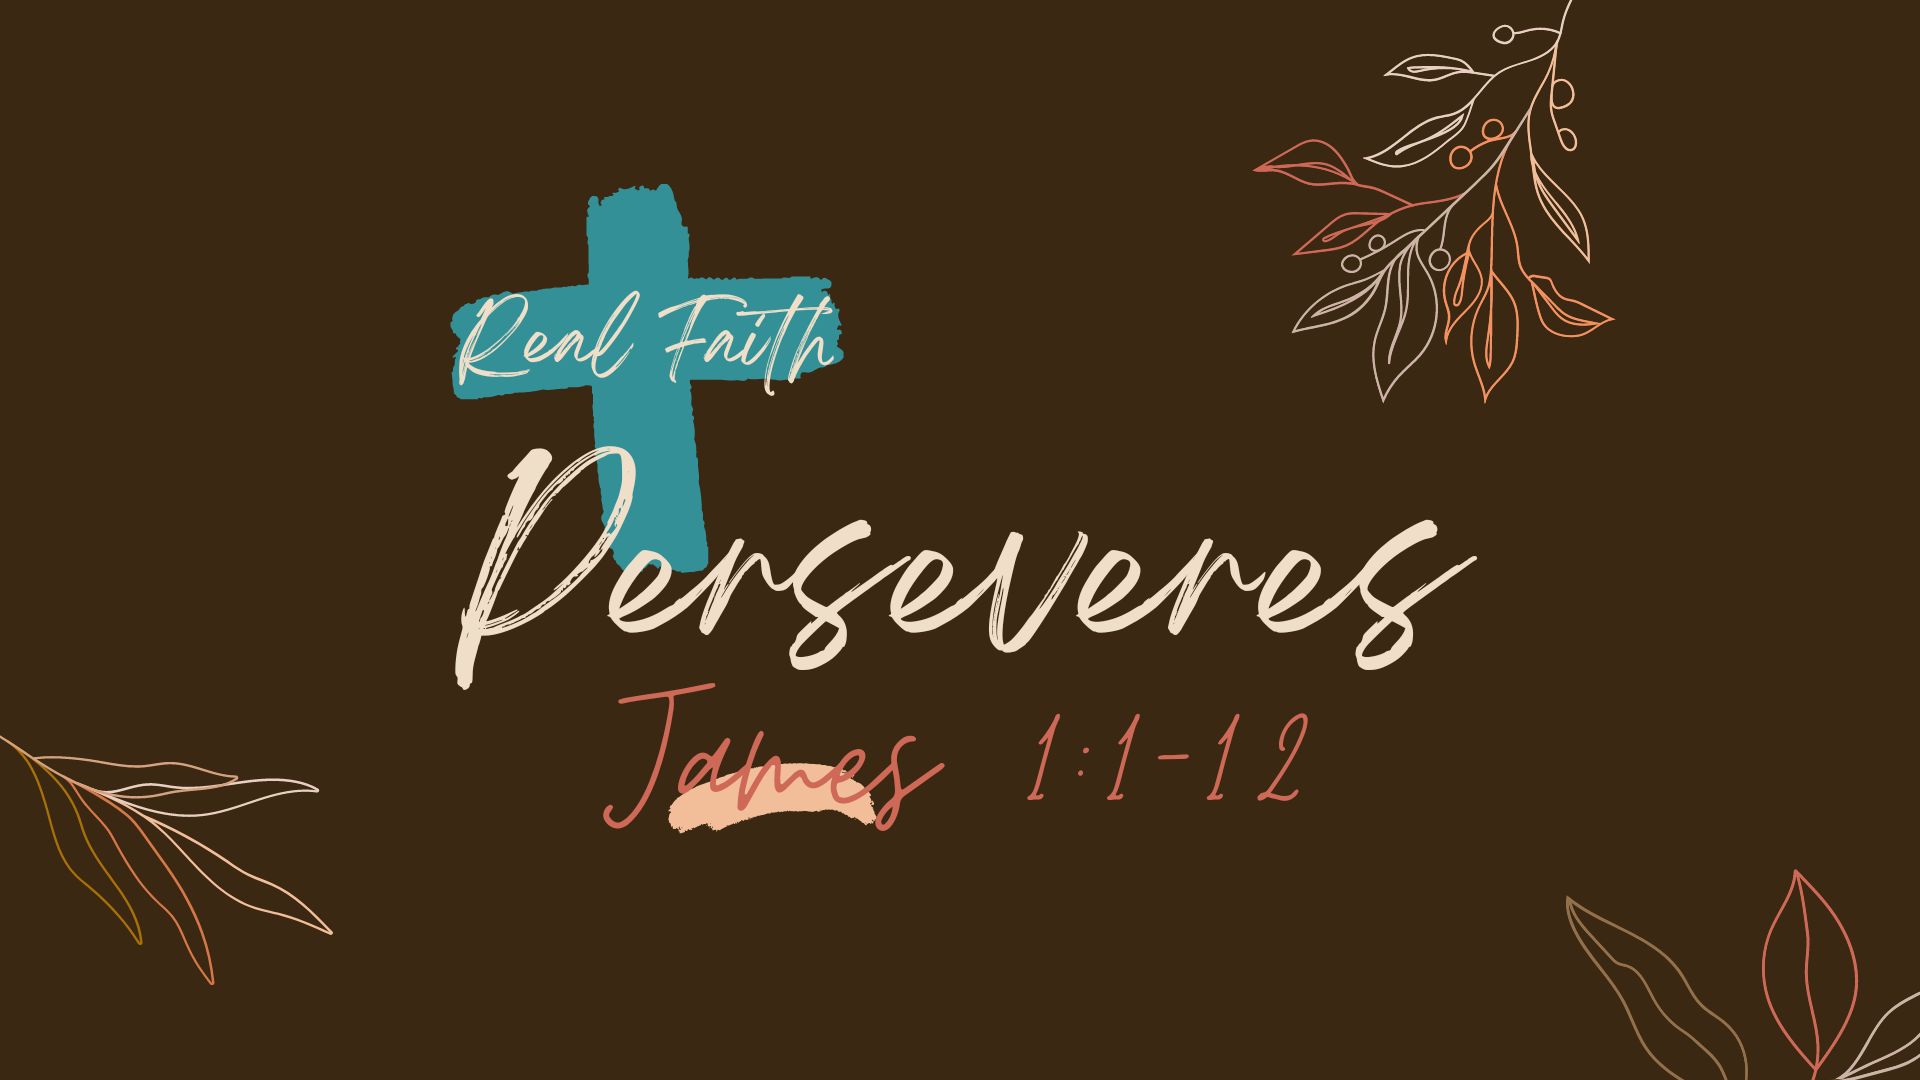 Real Faith - Perseveres